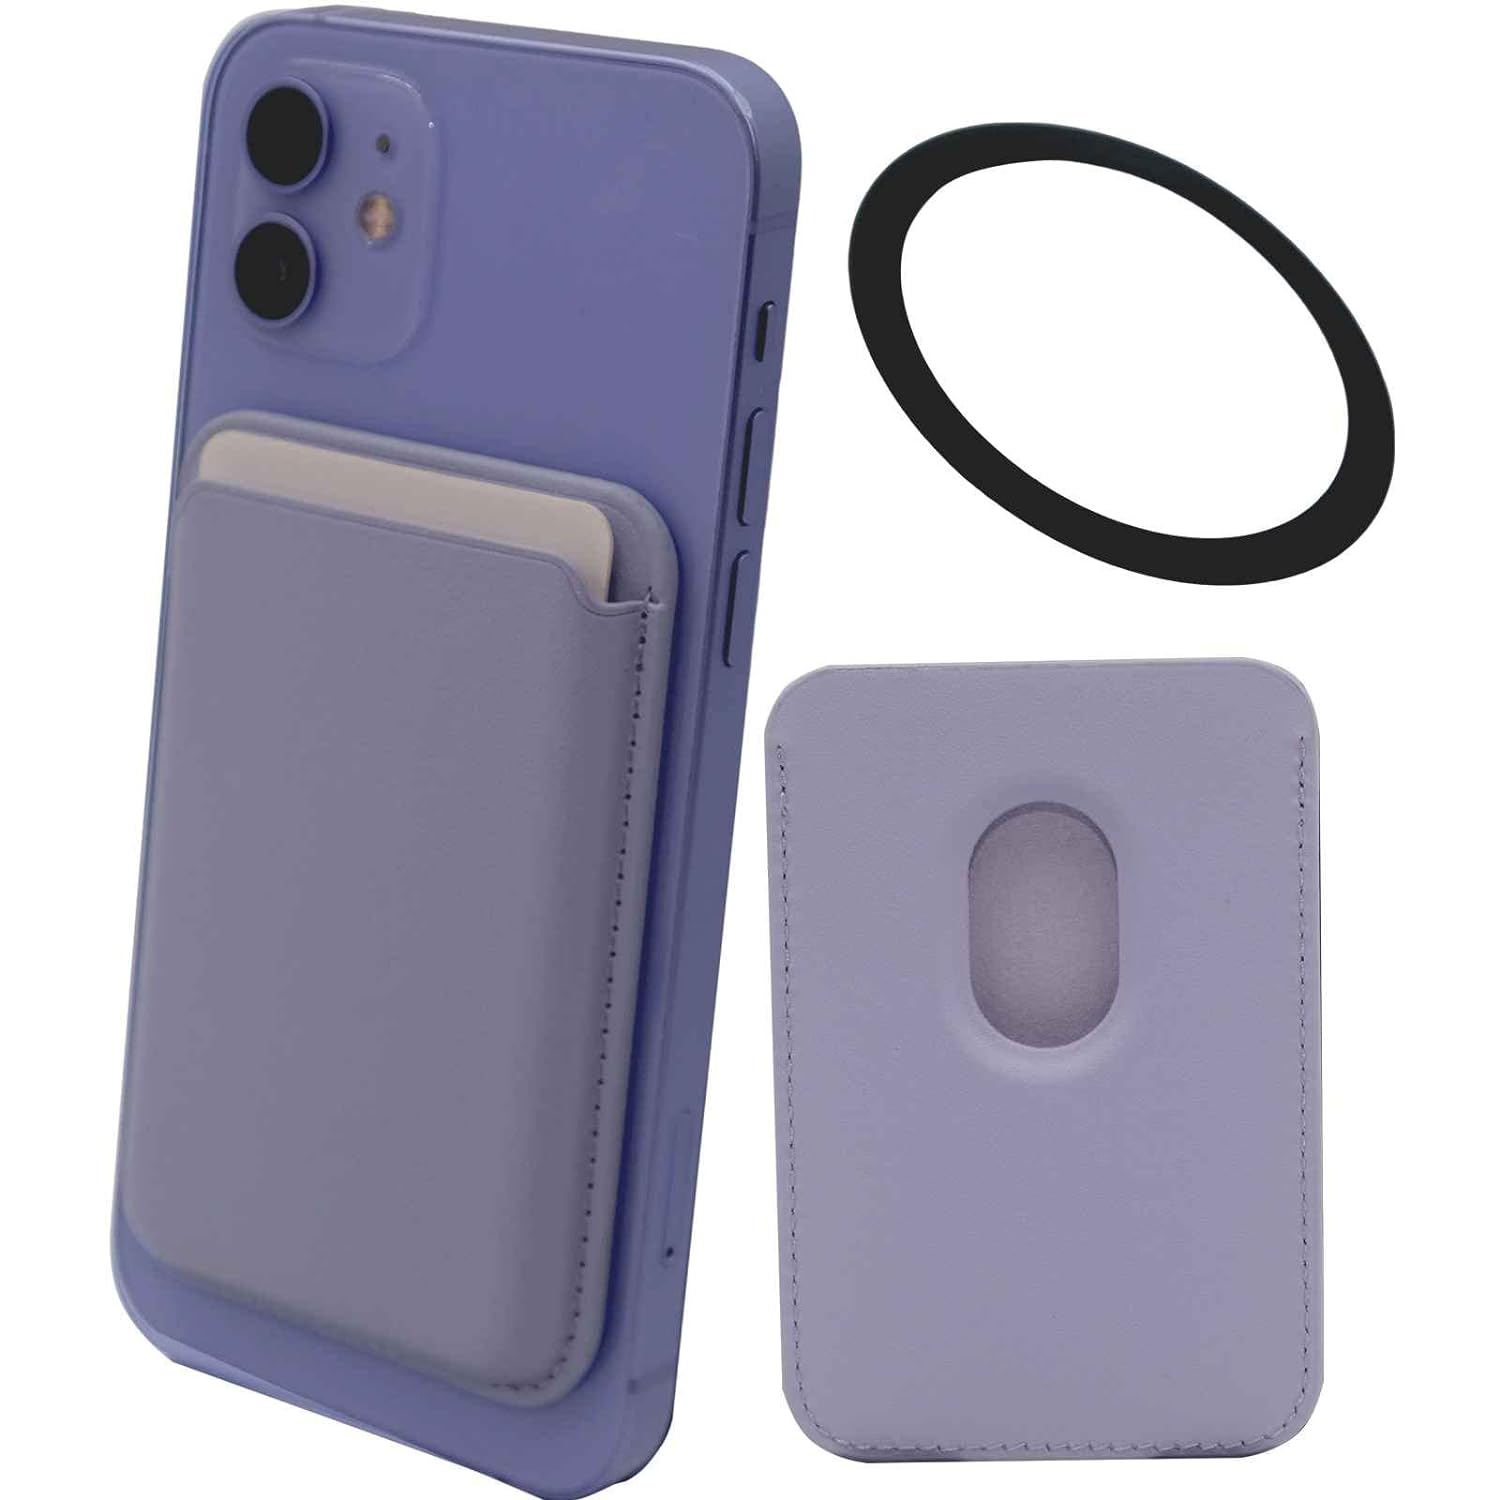 Meroqeel Magnetic Phone Leather Wallet Card Holder for Phone - Light Purple, Light Purple